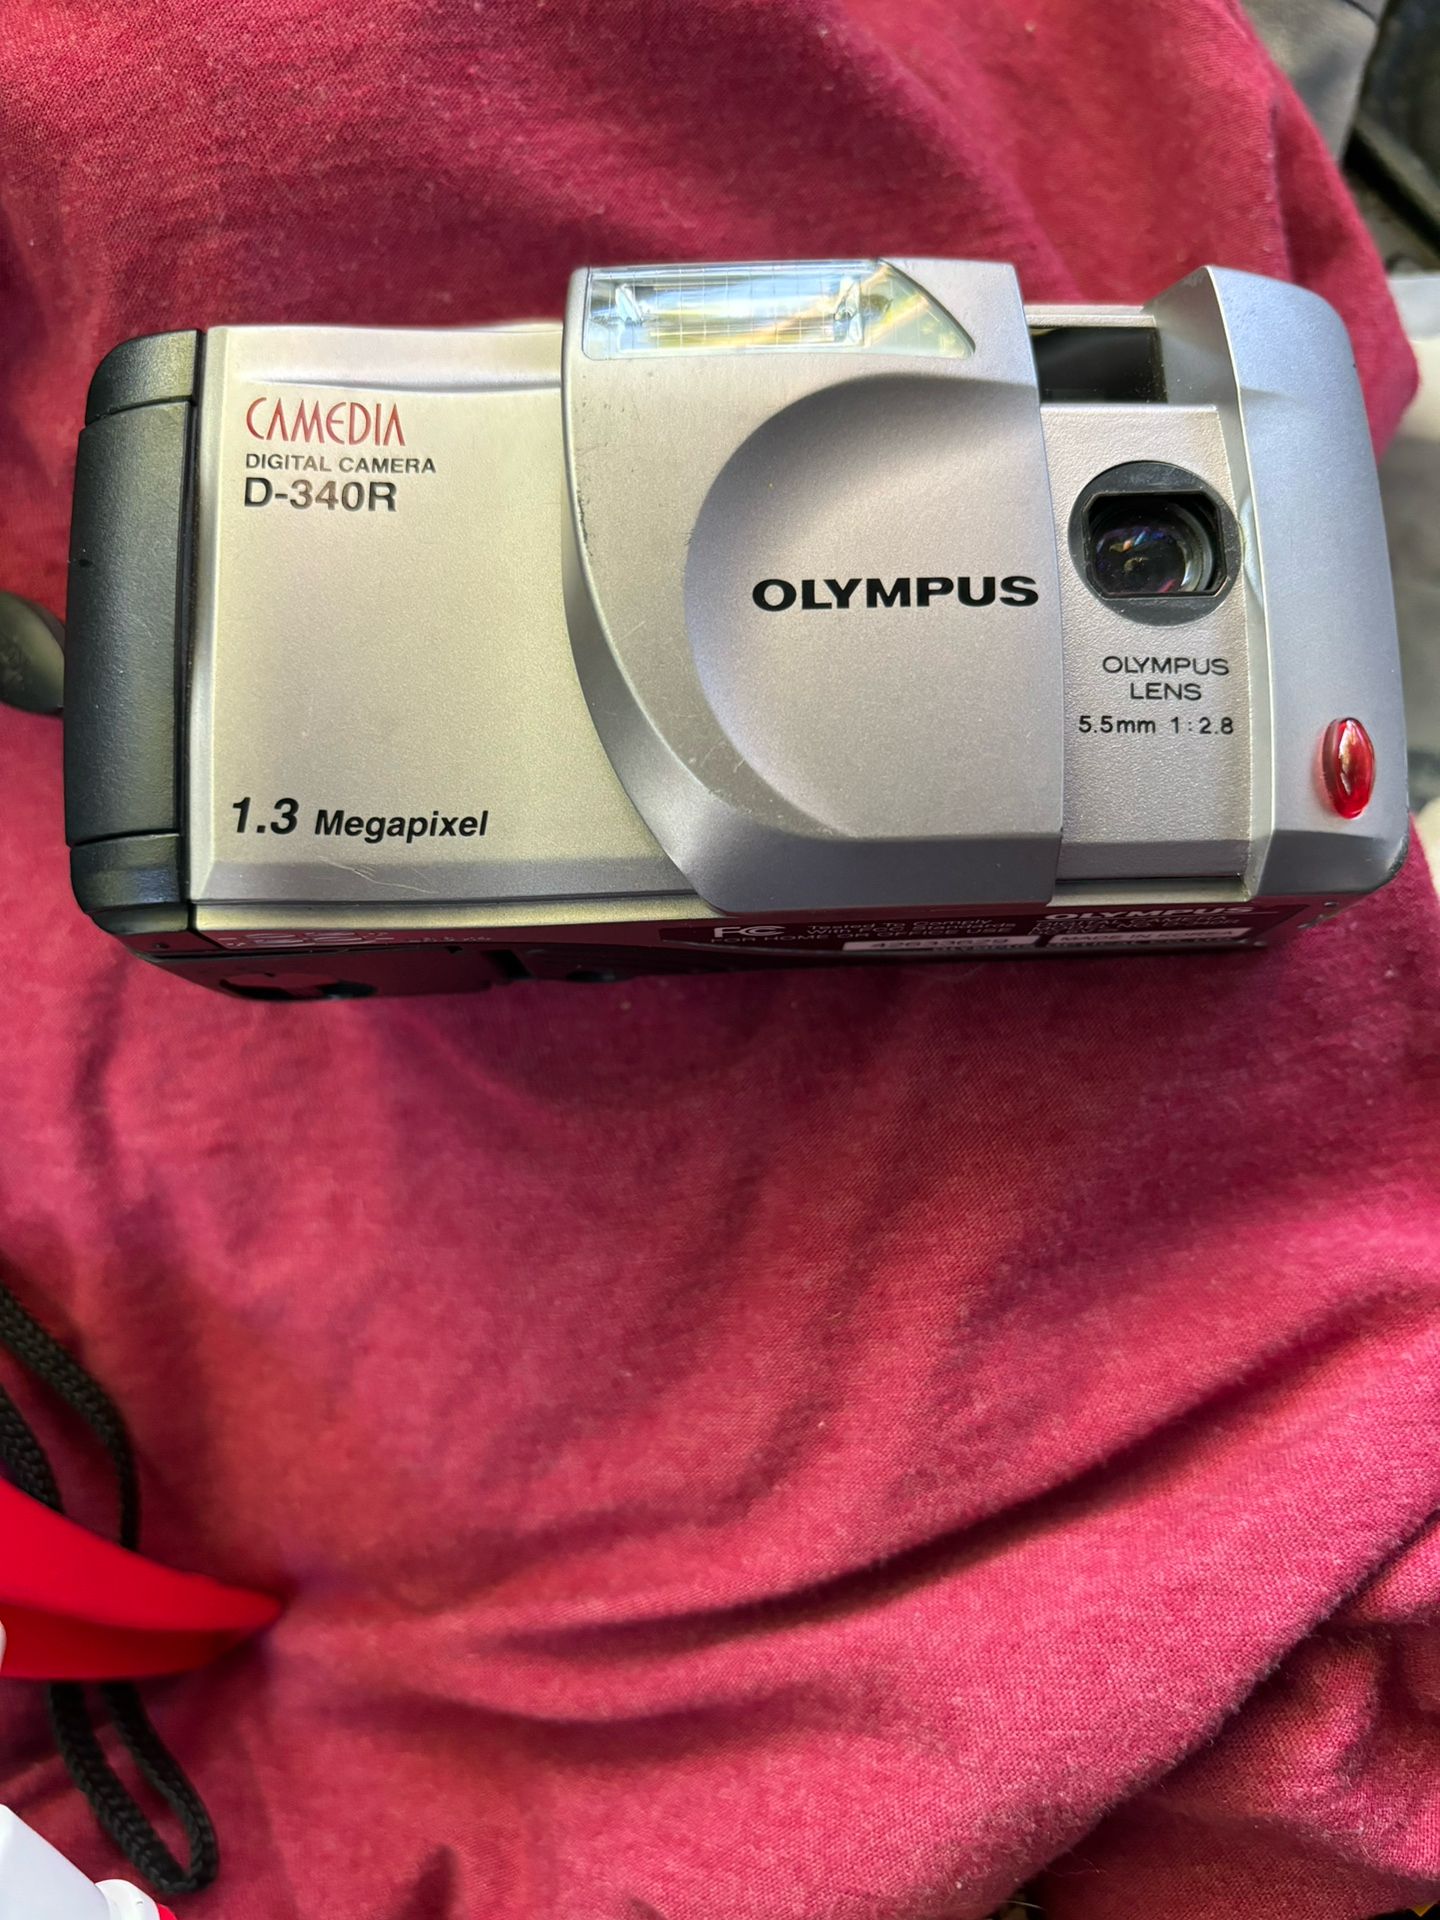 Silver Olympus Camedia LCD Digital Camera D-340R 1.3 Megapixel